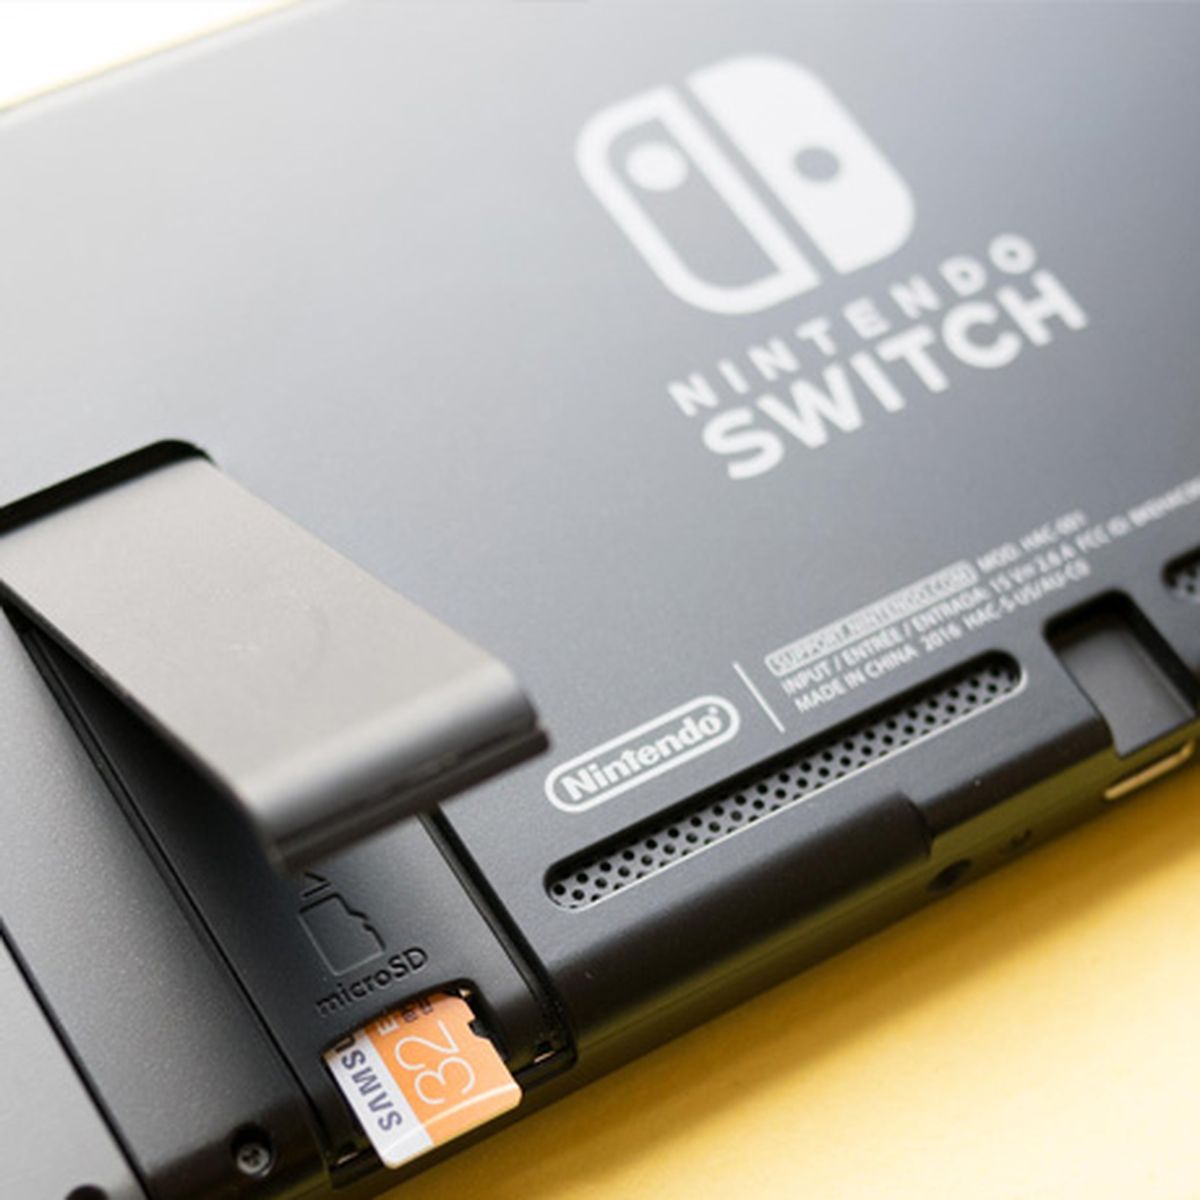 Nintendo Switch: su memoria interna será insuficiente para